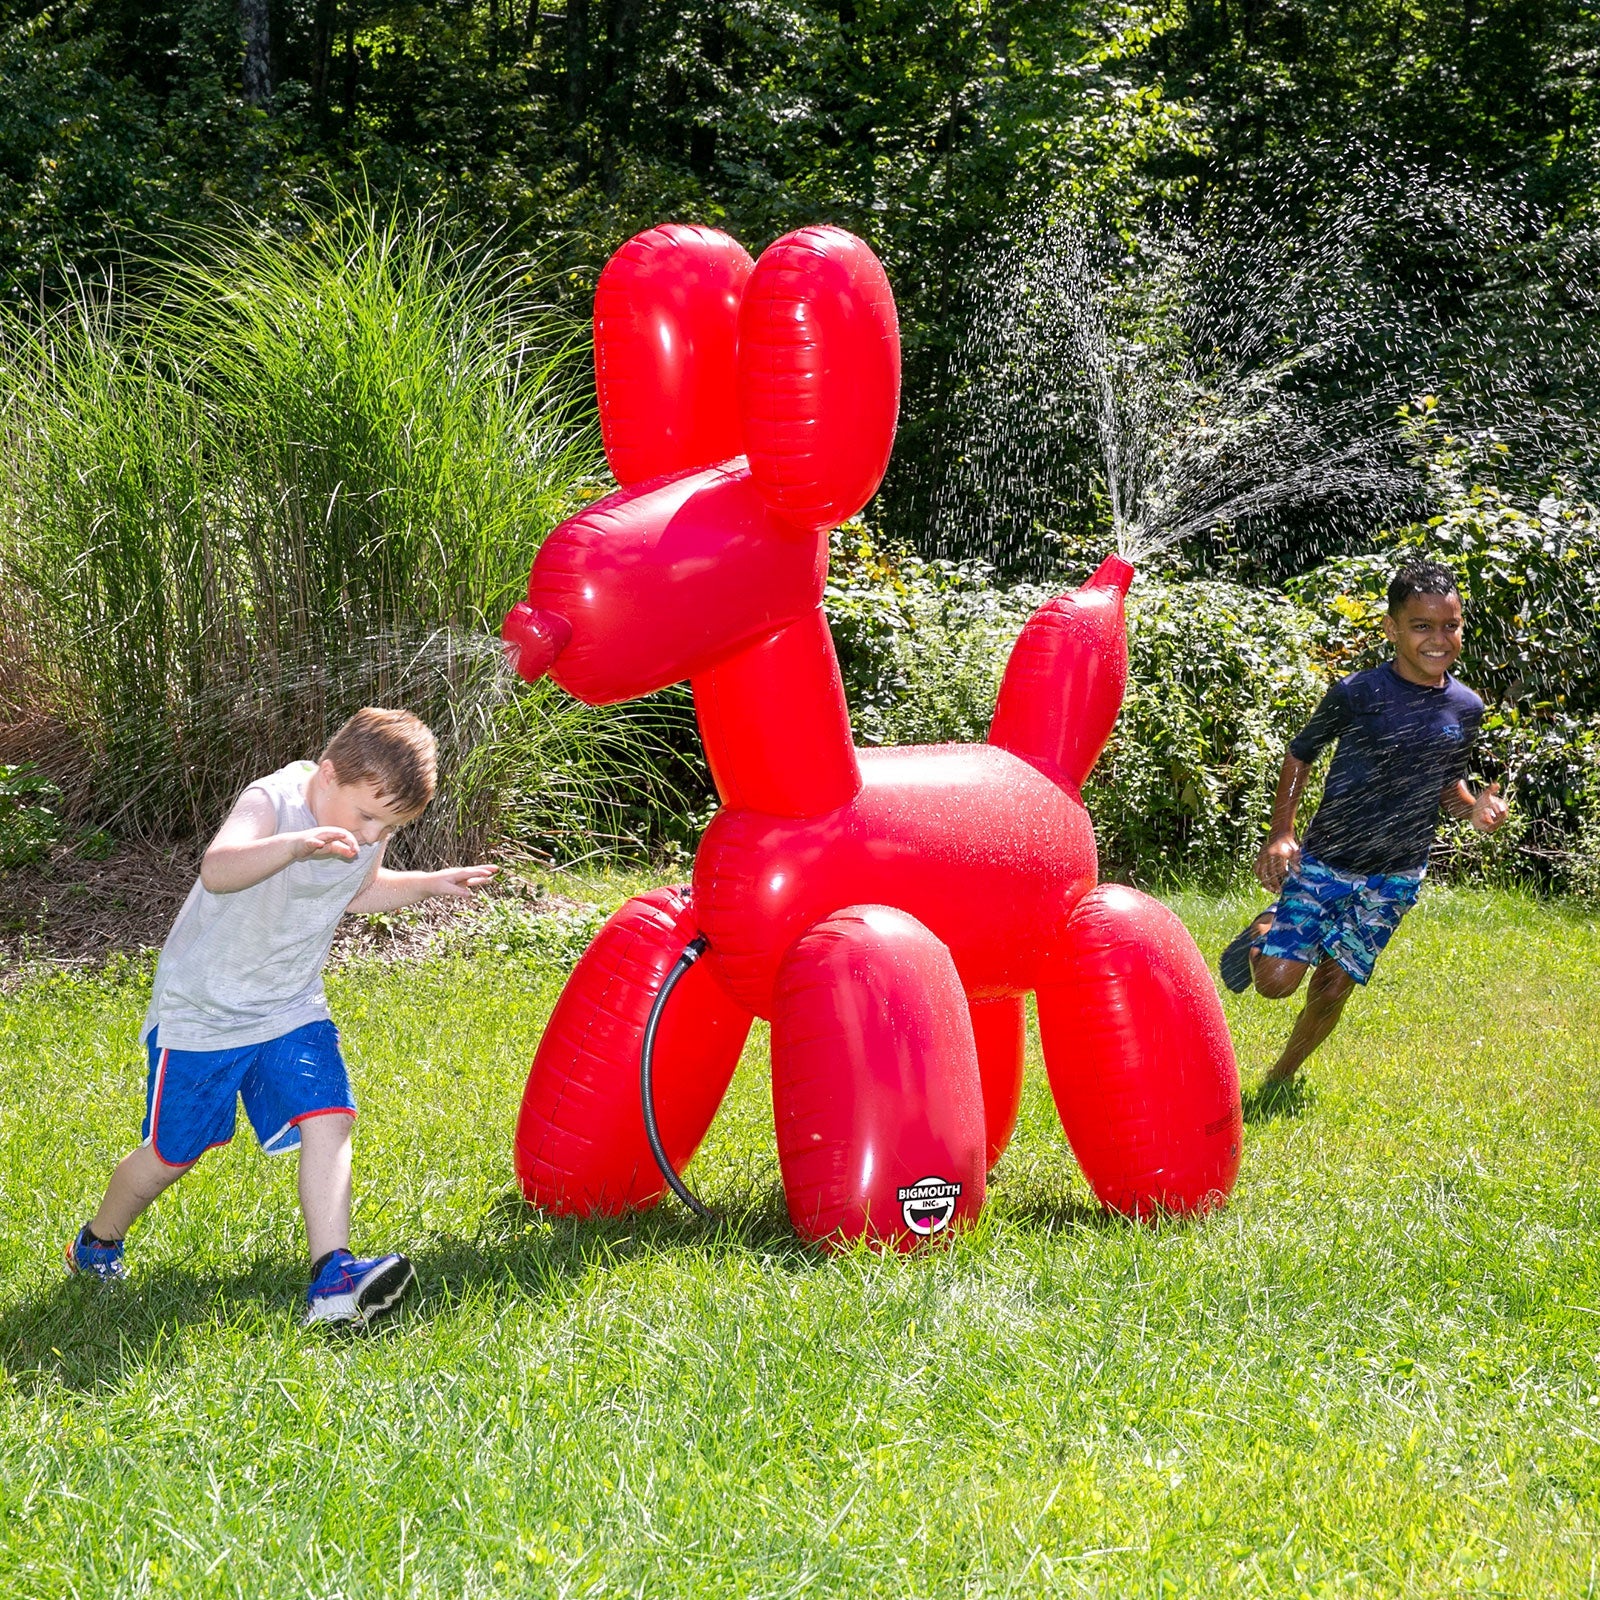 Baloon-dog Sprinkler, il ballon dog gonfiabile di Third Drawer Down